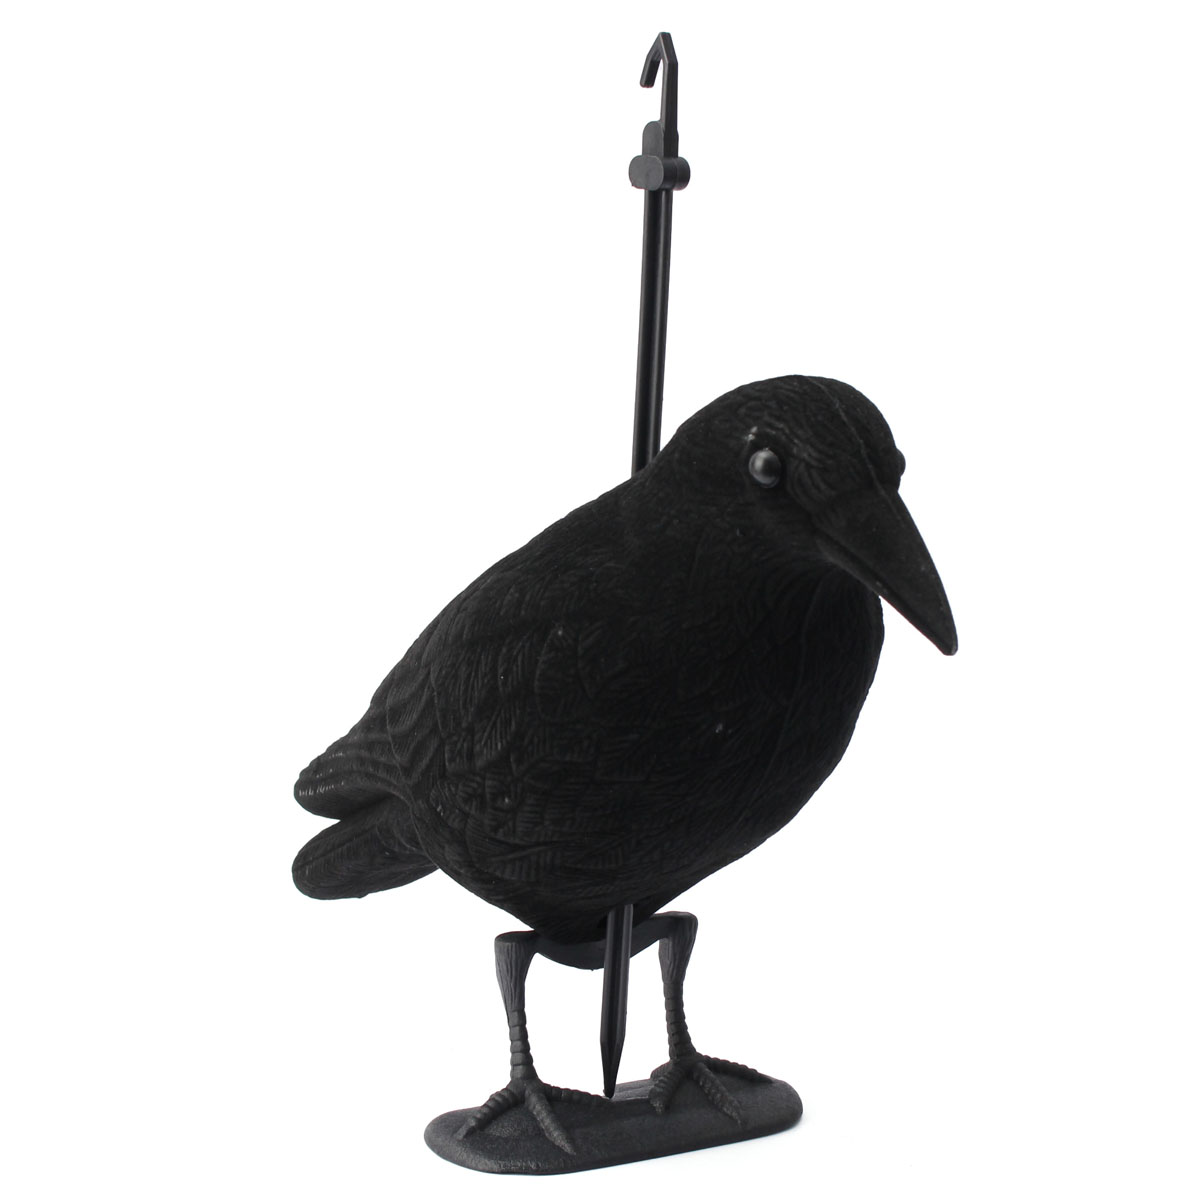 1Pcs-Birds-Decoy-Plastic-Flocked-Hard-Black-Crow-Trap-Decoration-for-Hunting-Camping-1001075-4